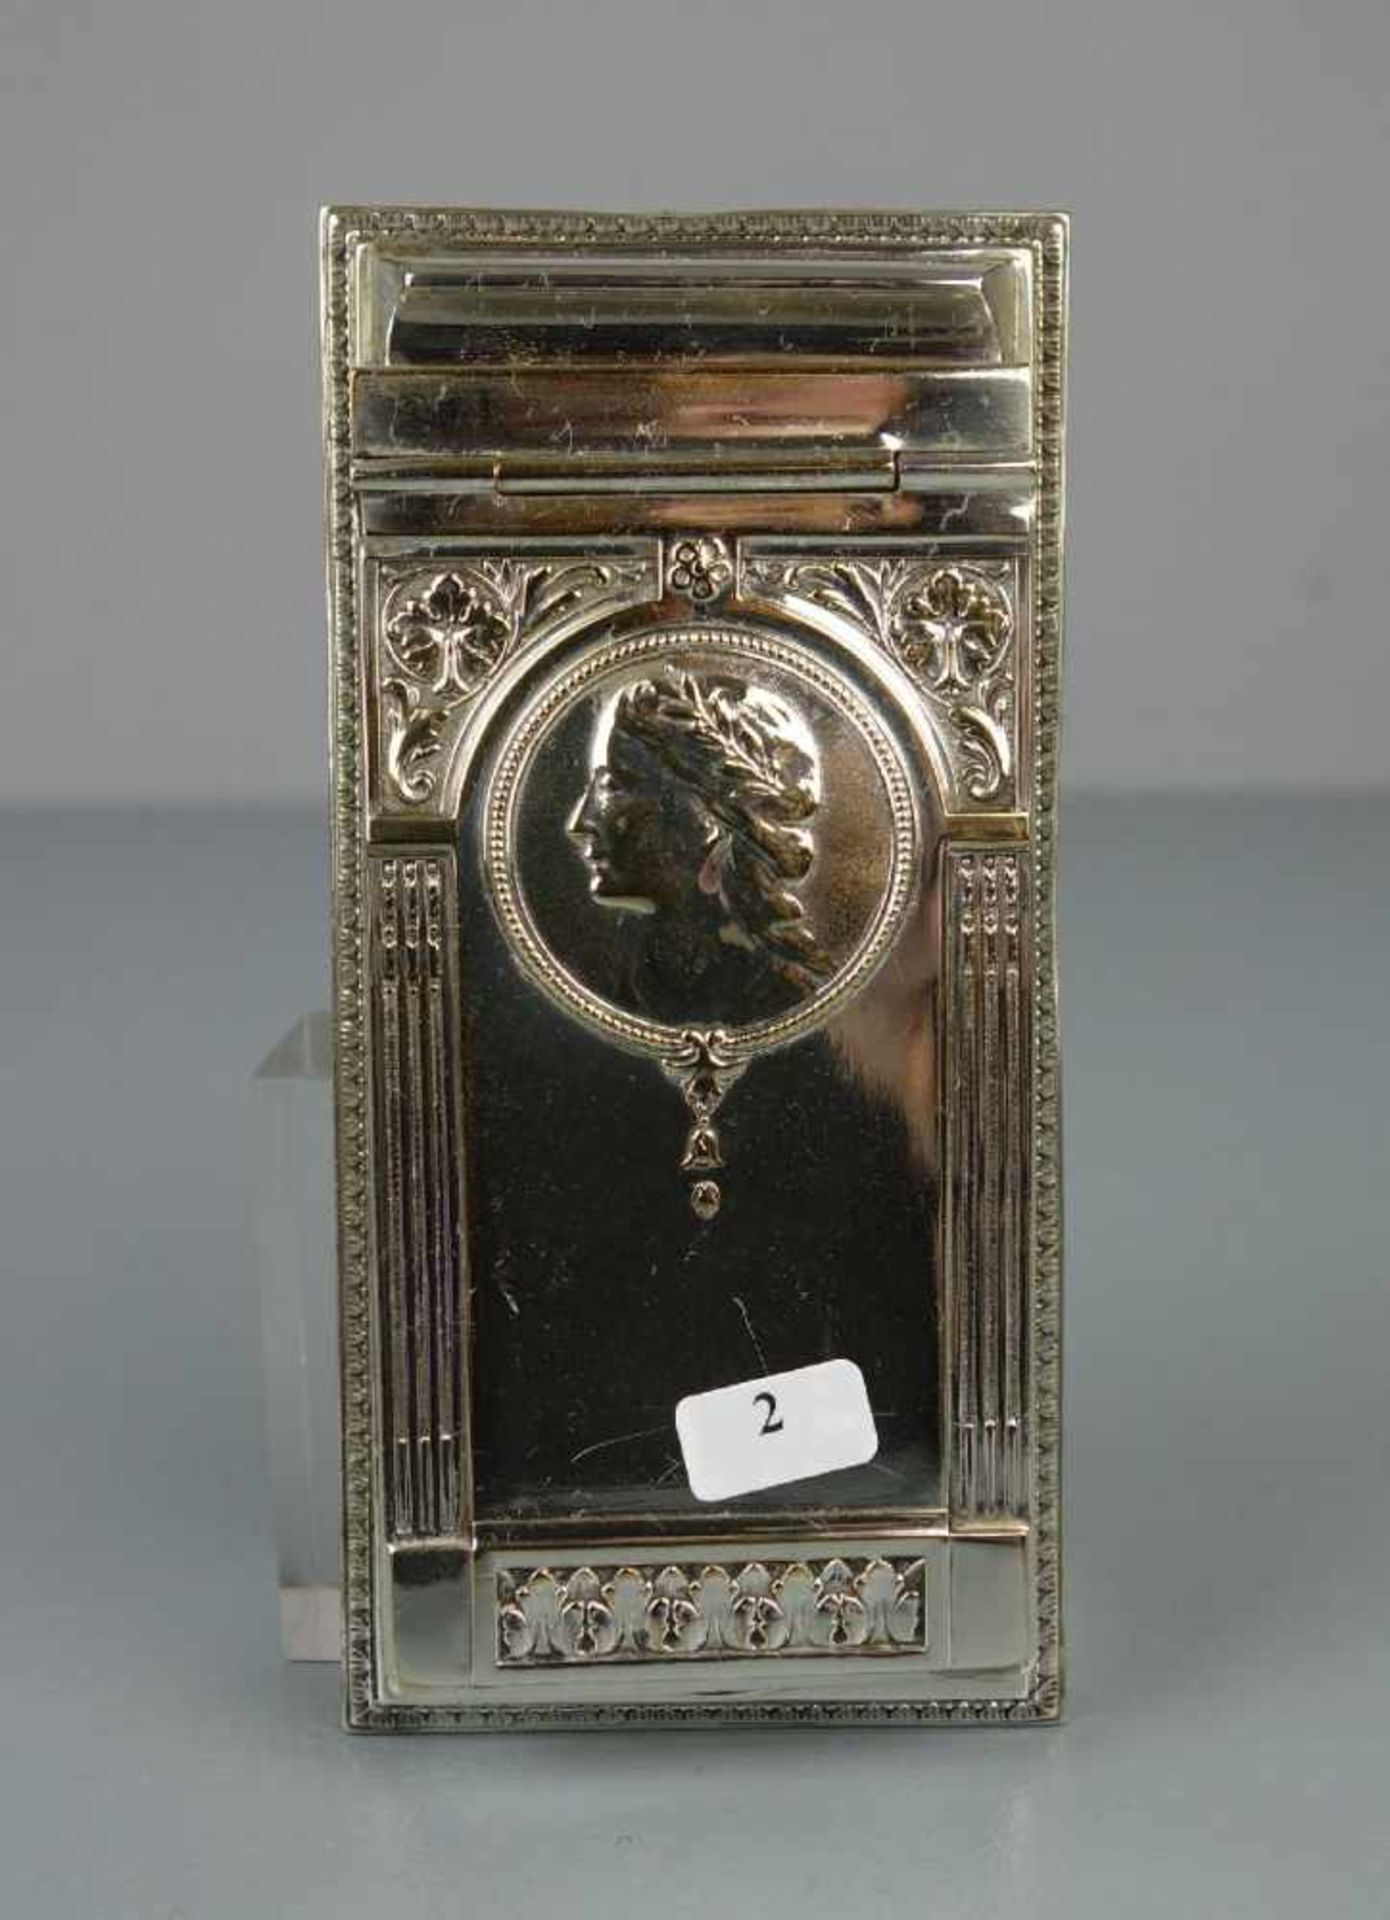 NOTIZBLOCK - HALTER / TANZKARTE / notepad holder, versilbertes Metall, um 1900. Rückseite